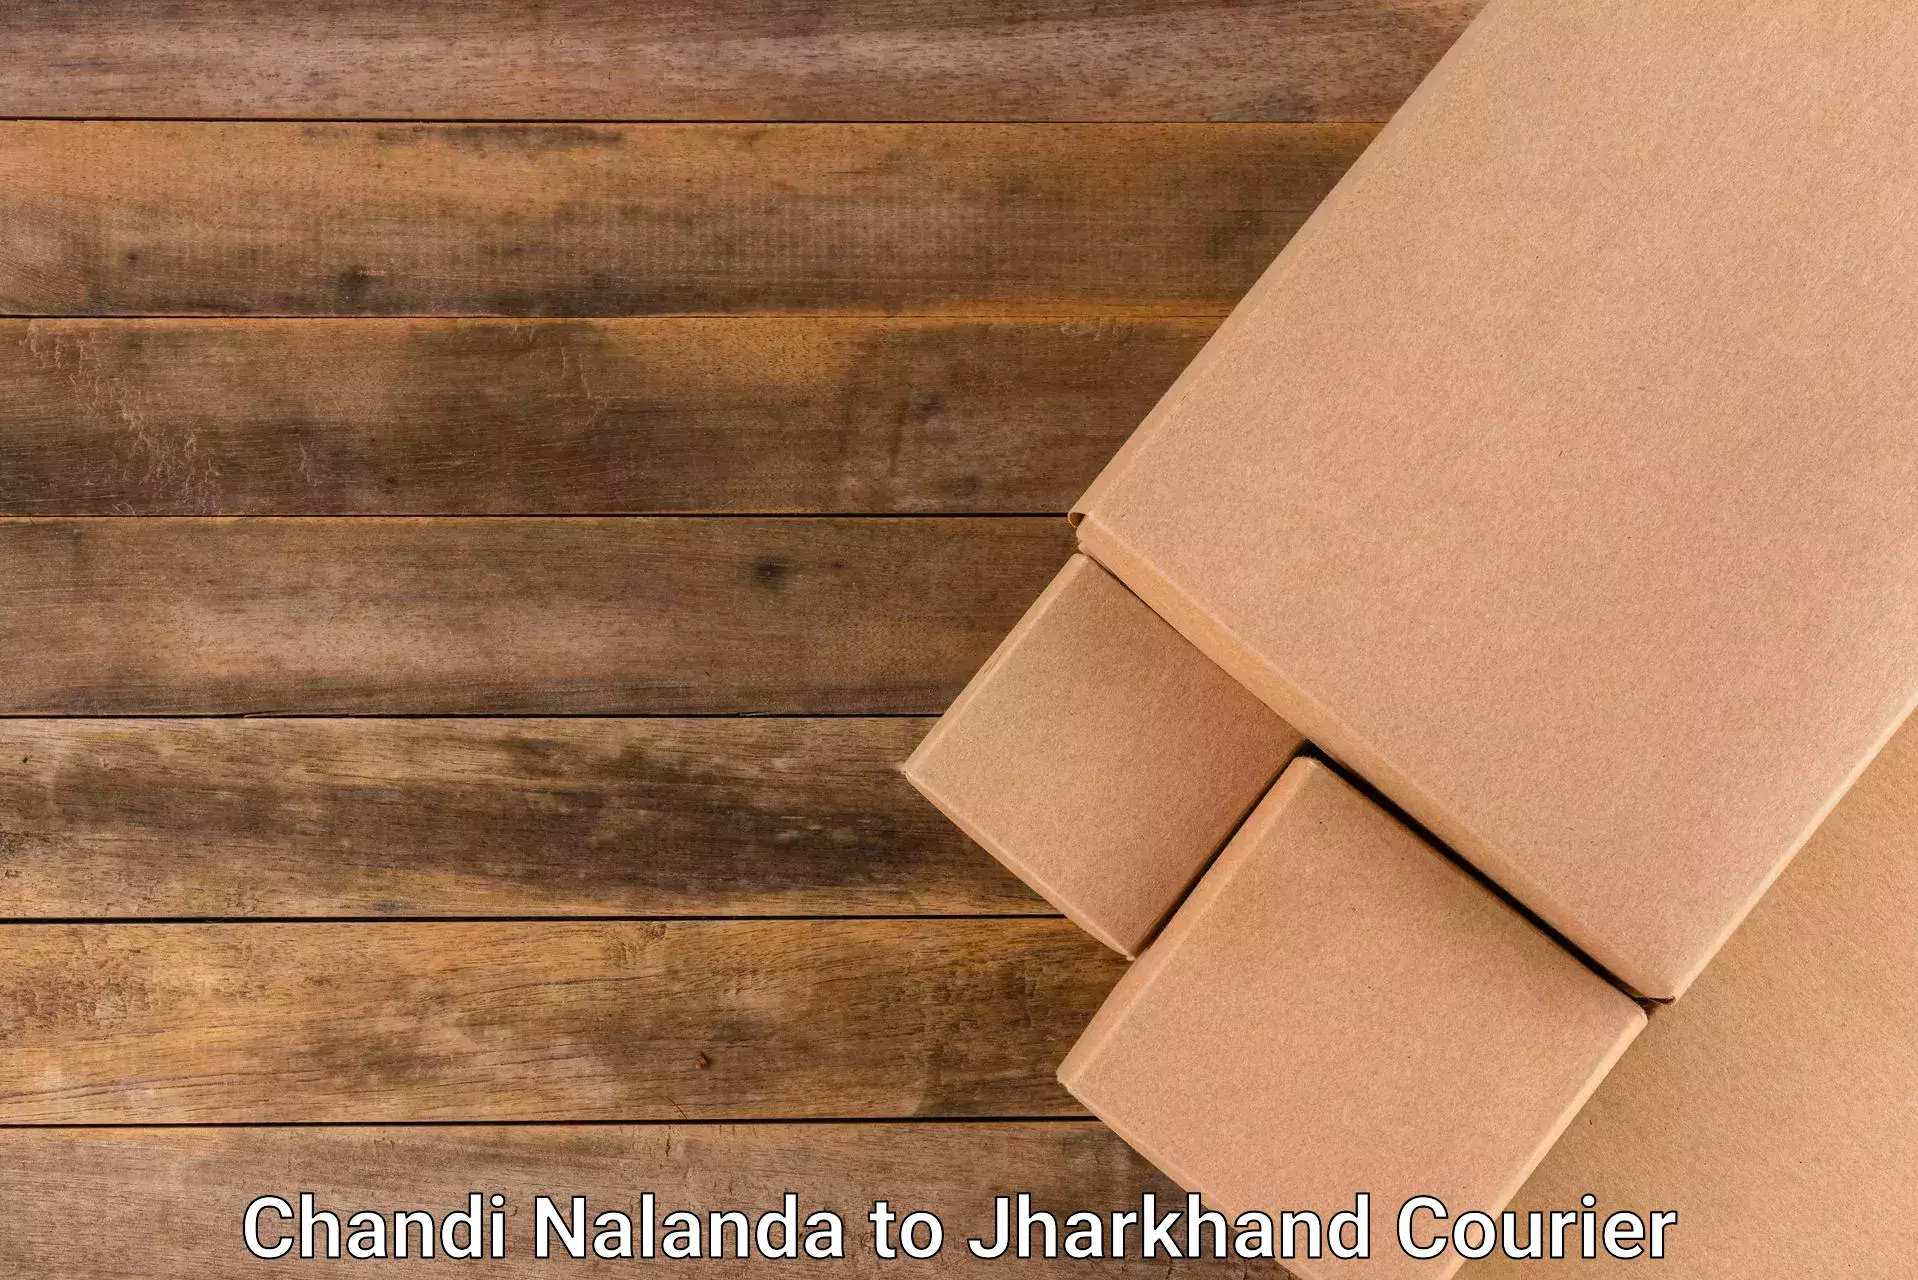 Express delivery network Chandi Nalanda to Dhanbad